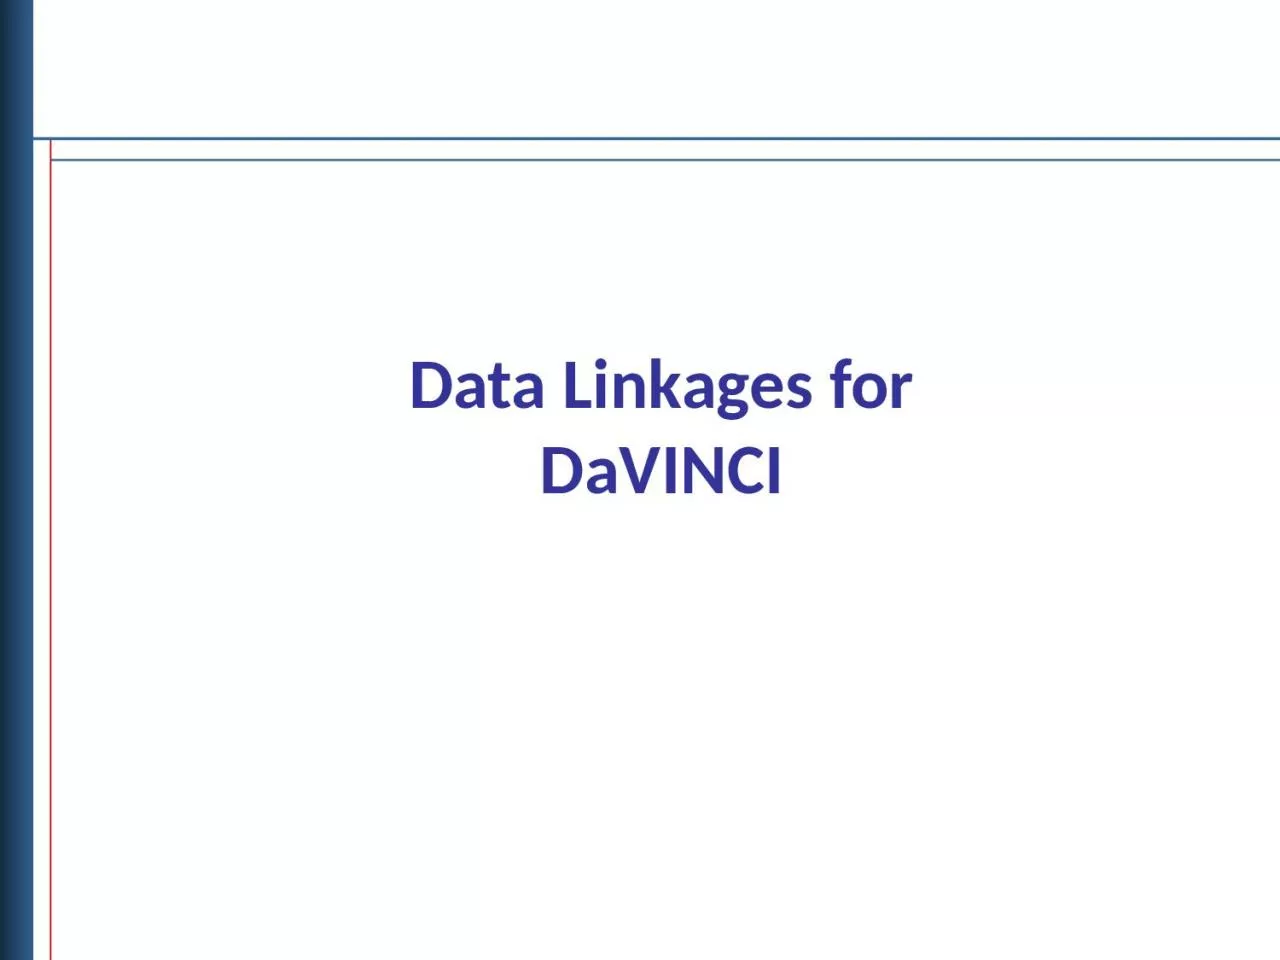 Data Linkages for DaVINCI